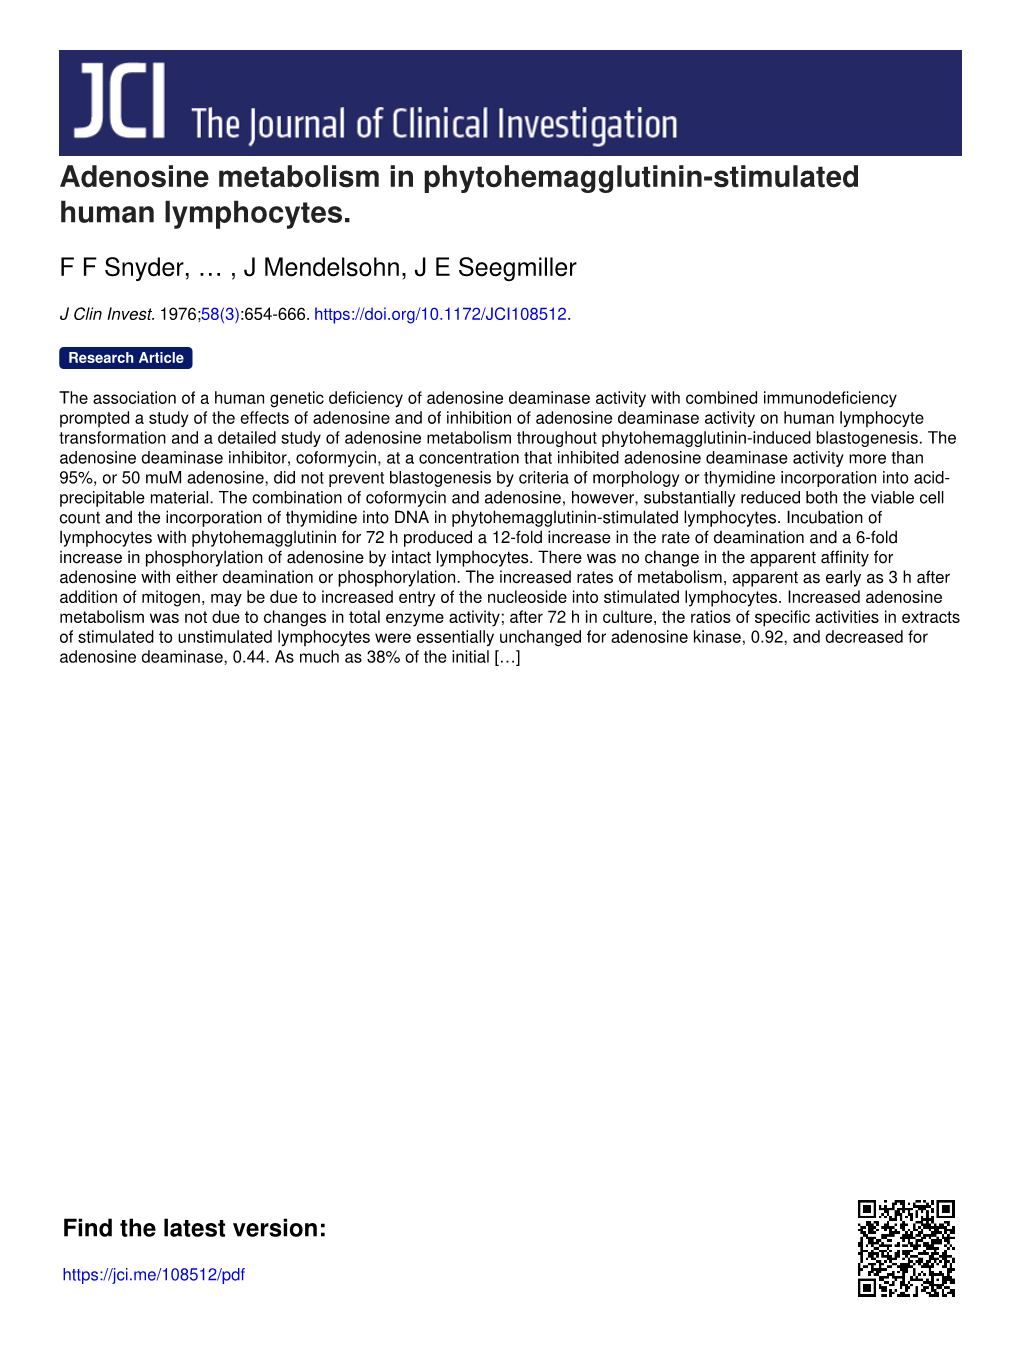 Adenosine Metabolism in Phytohemagglutinin-Stimulated Human Lymphocytes